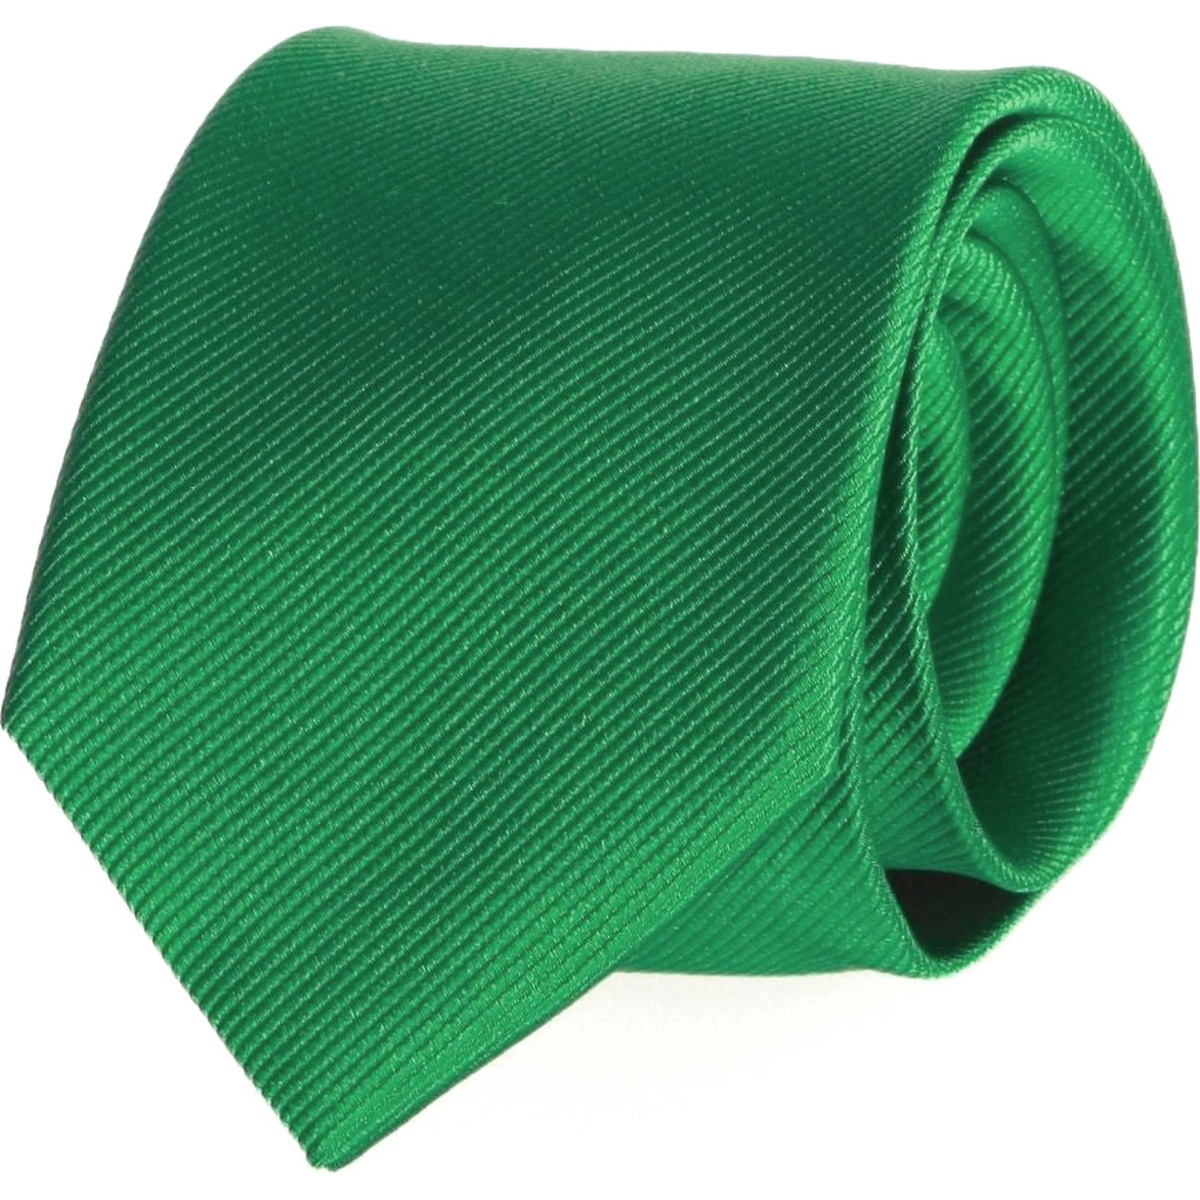 Vêtements Homme prix dun appel local Cravate Soie Vert Emeraude Uni F68 Vert